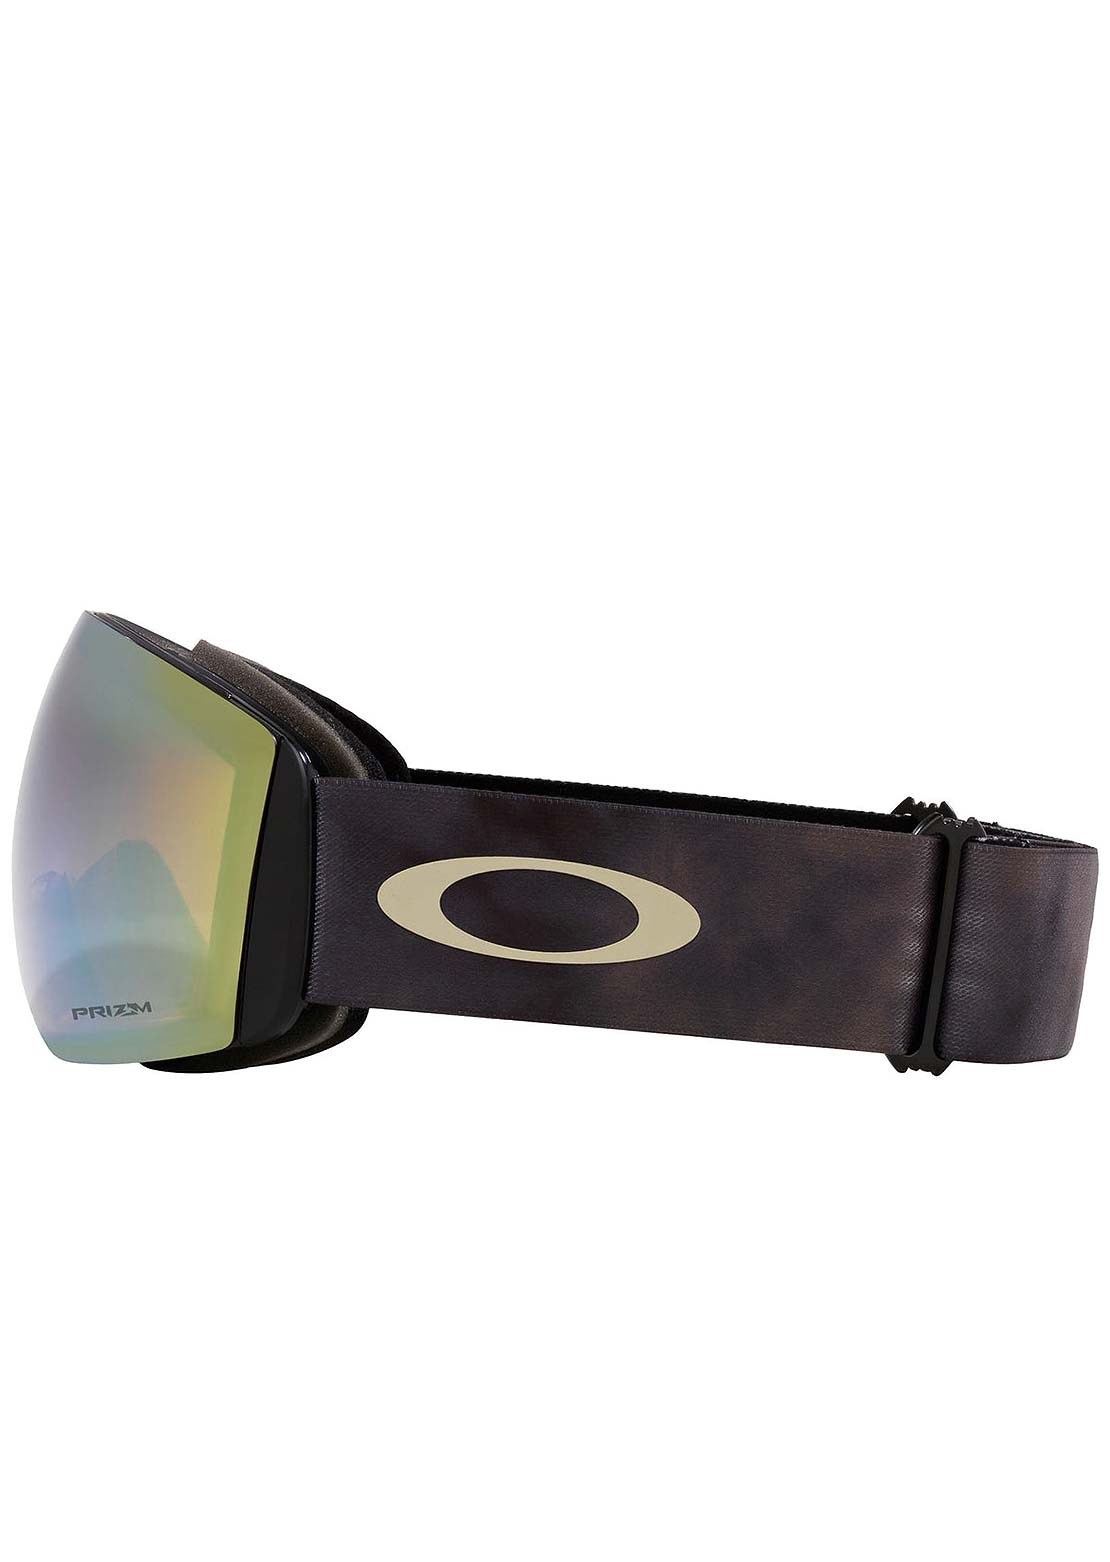 Oakley Flight Deck L Goggles Grey Smoke/Prizm Sage Gold Iridium